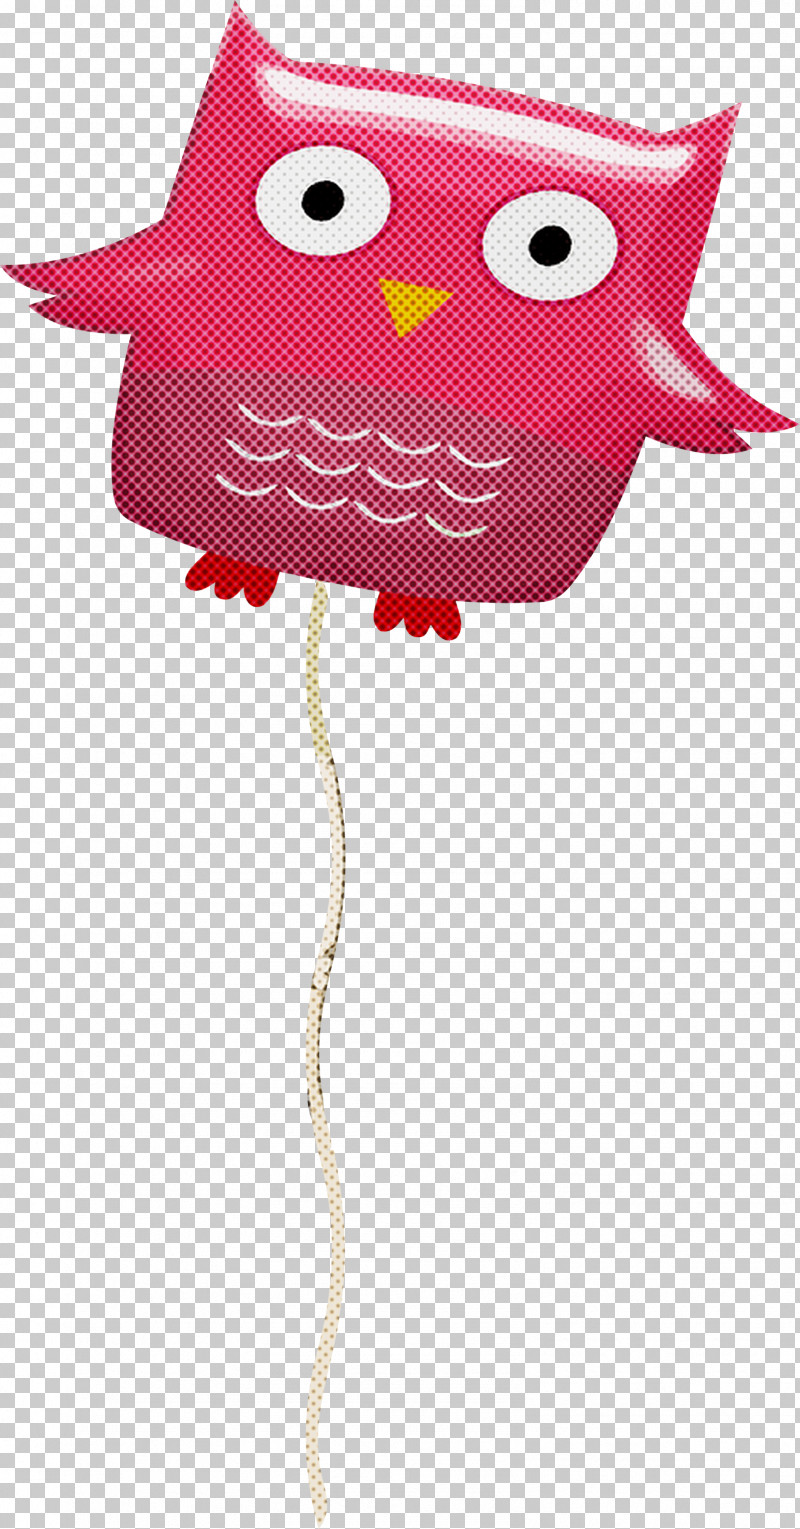 Birds Cartoon Character Beak Meter PNG, Clipart, Balloon, Beak, Biology, Birds, Cartoon Free PNG Download